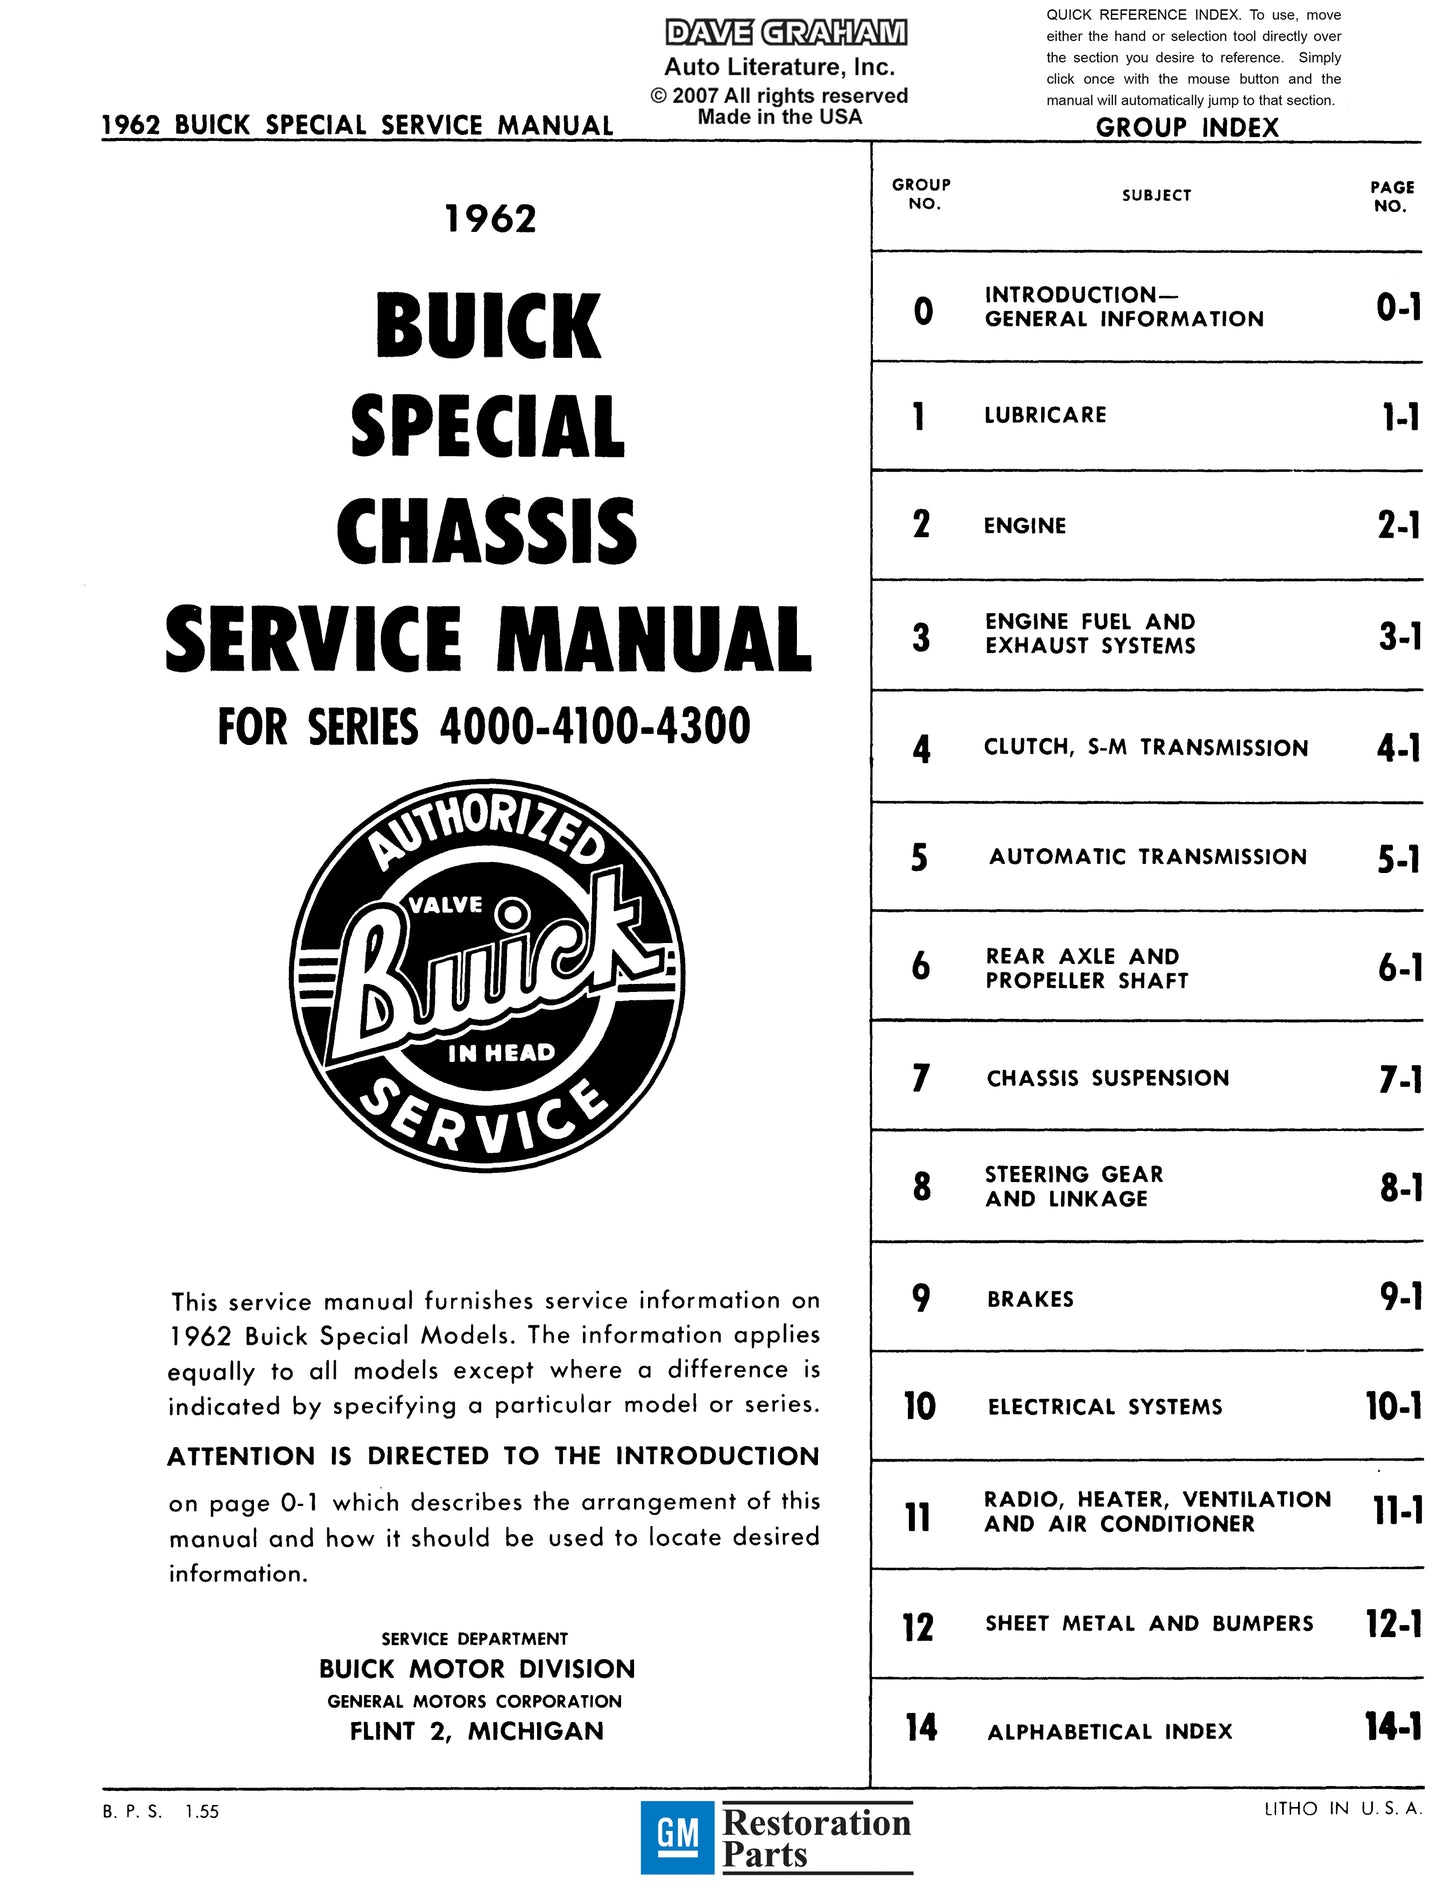 1962 Buick Repair Manuals - All Models